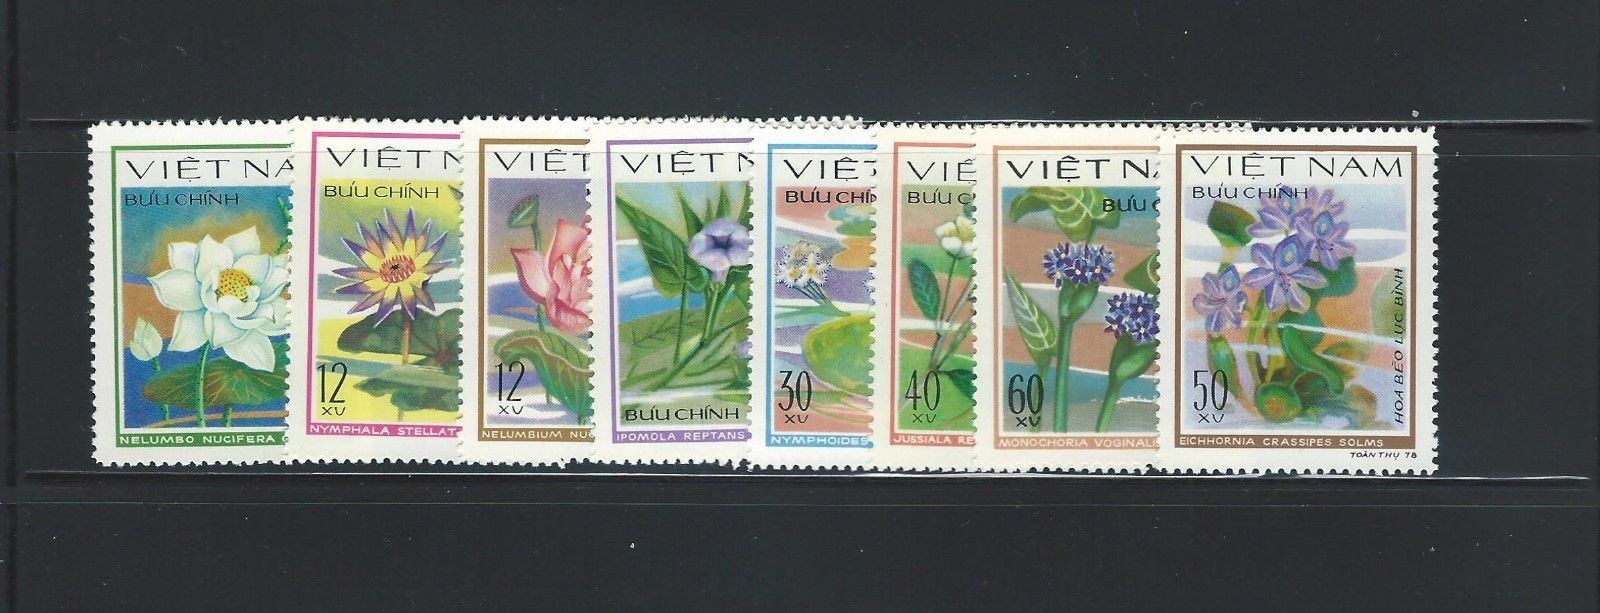 Vietnam - Scott #1038-1045 (Flowers)  MNH